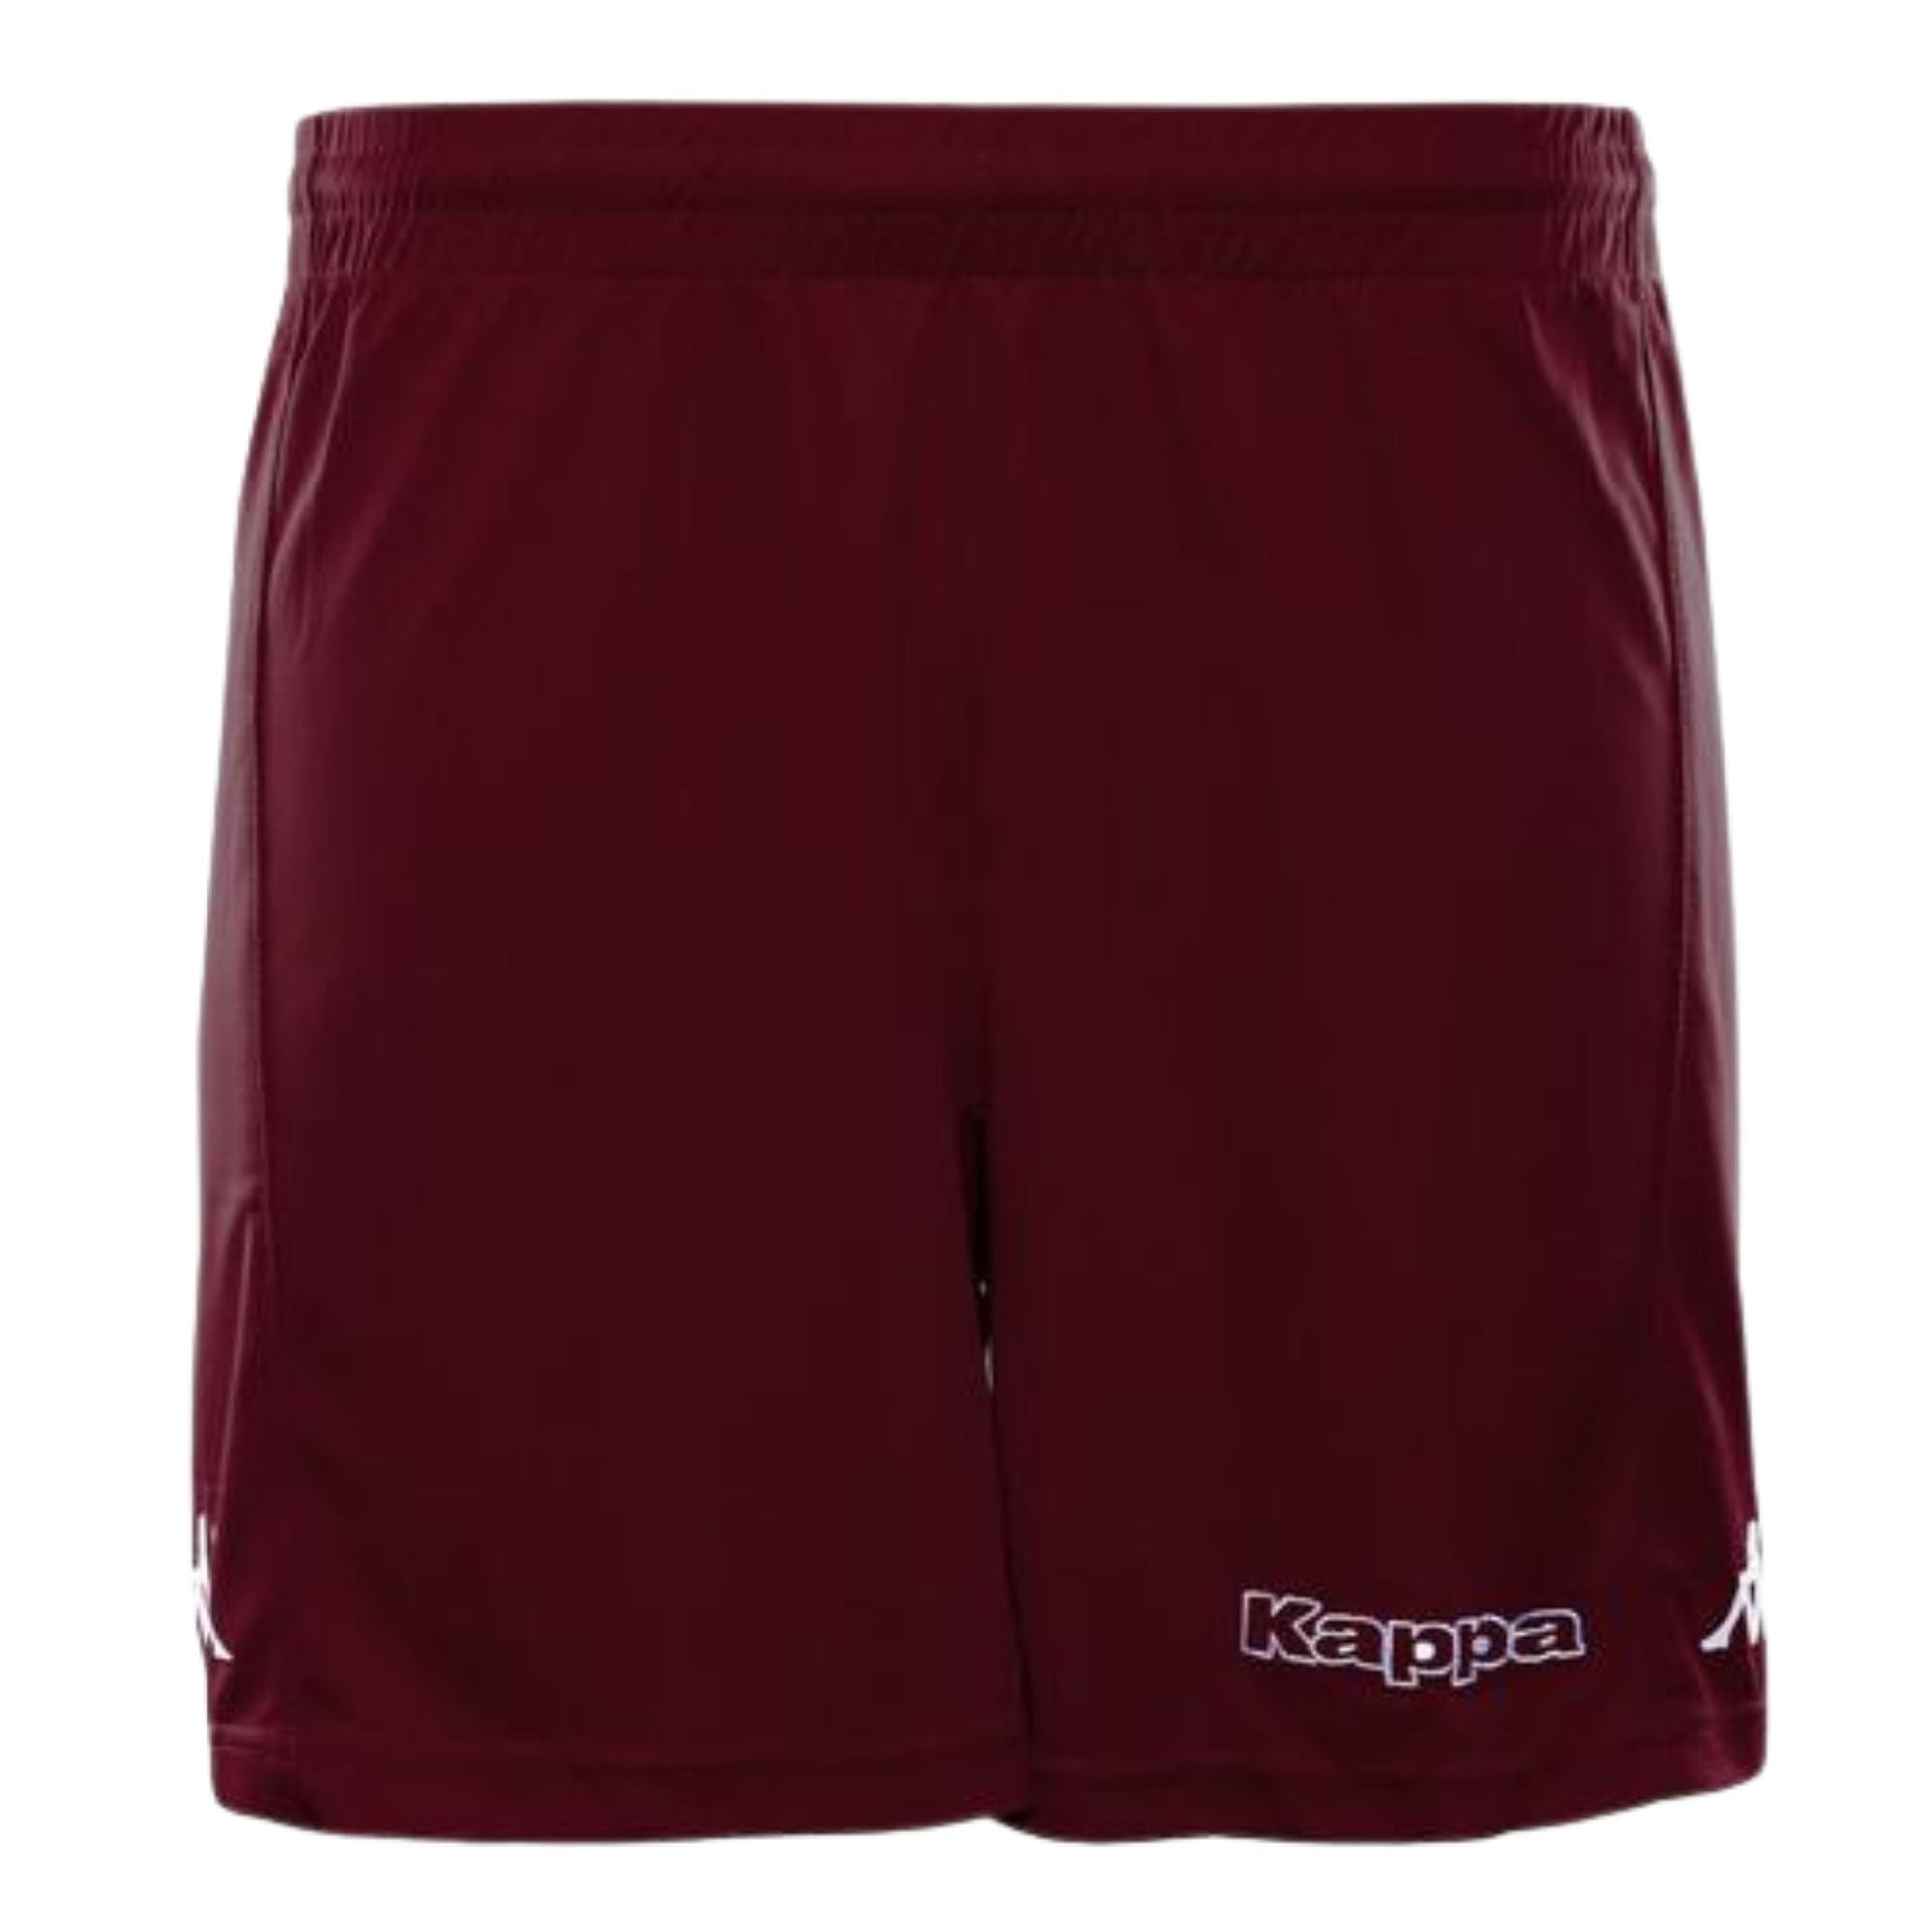 Kappa Unisex Shorts Shorts KAPPA XS MAROON 